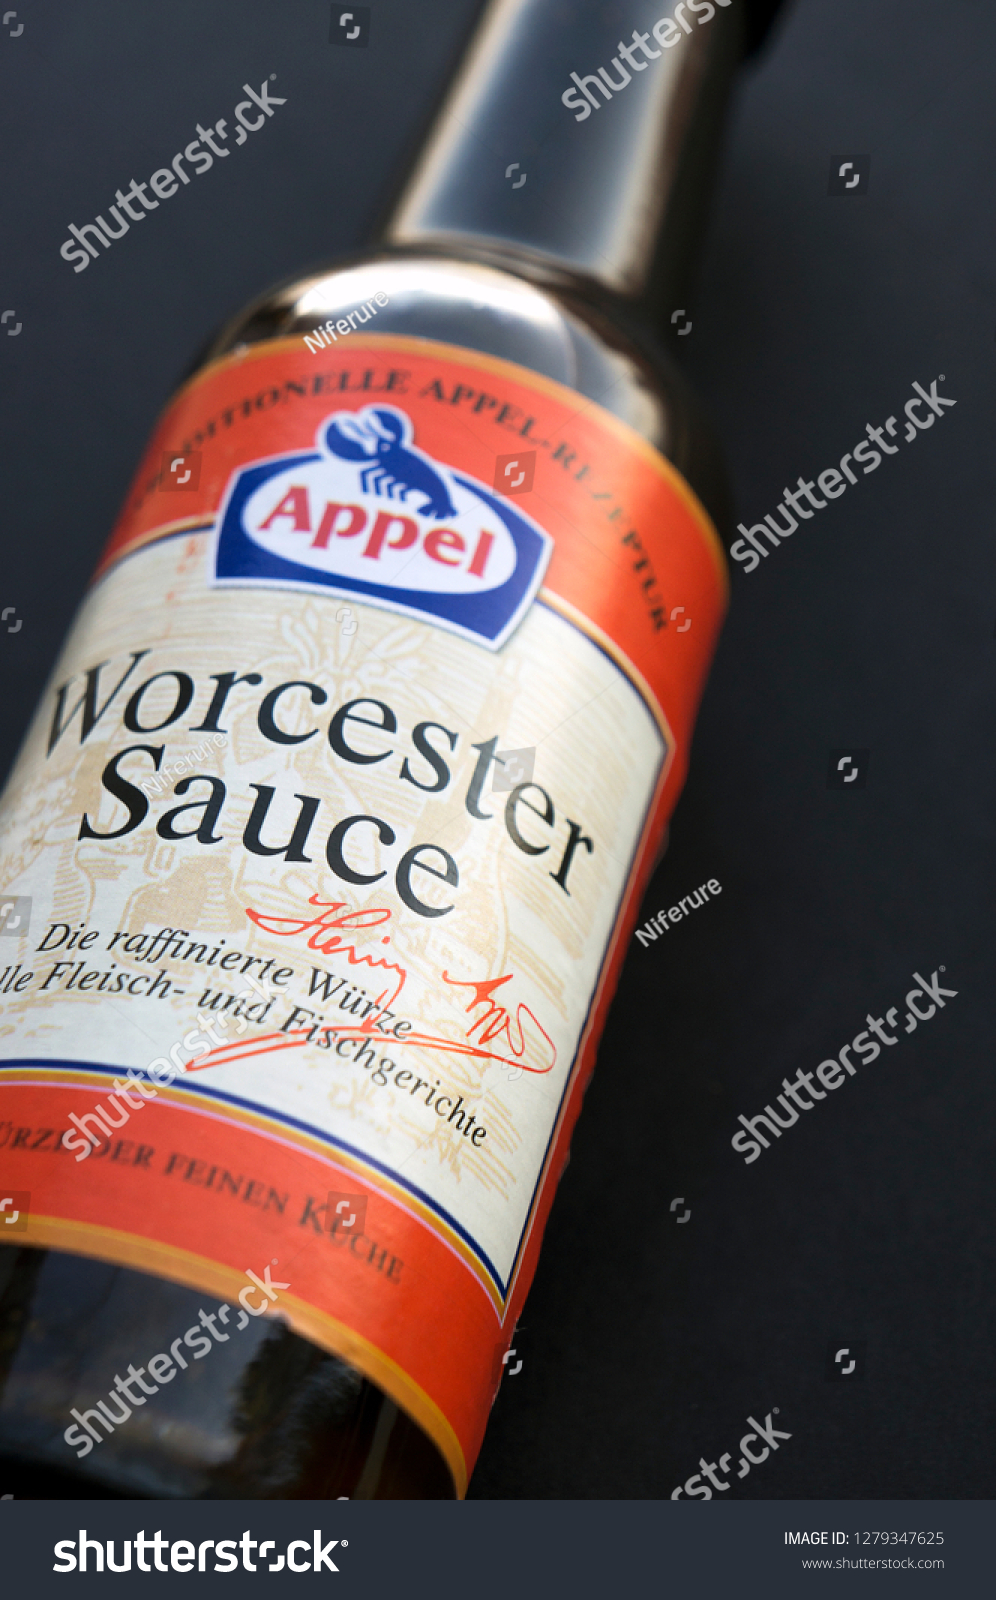 stock-photo-krasnodar-russia-january-bottle-of-worcester-sauce-by-apple-on-black-background-1279347625.jpg